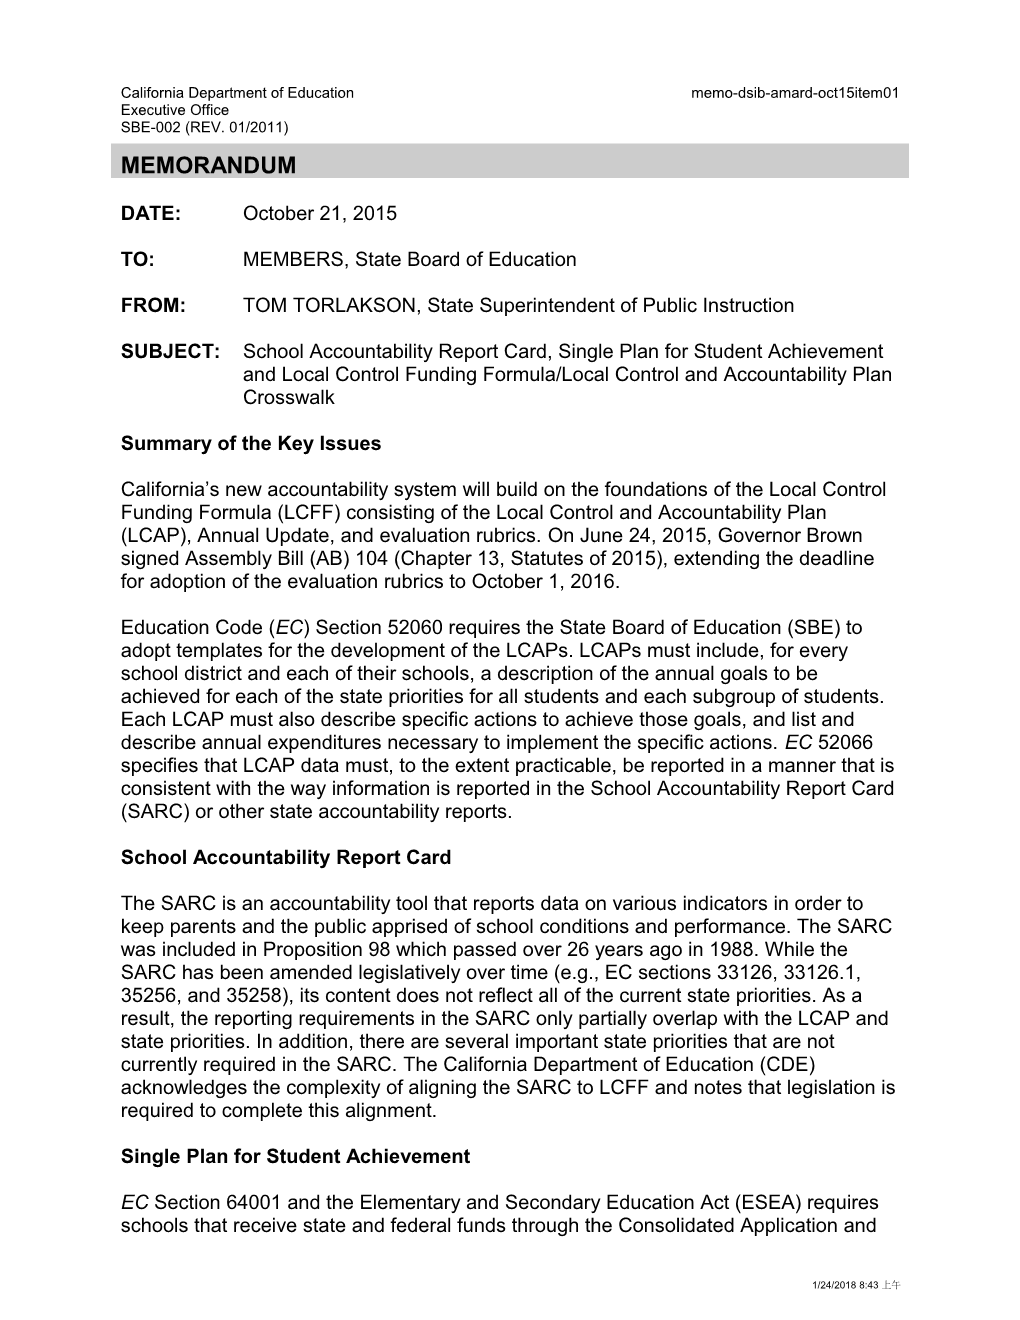 October 2015 Memo DSIB AMARD Item 01 - Information Memorandum (CA State Board of Education)